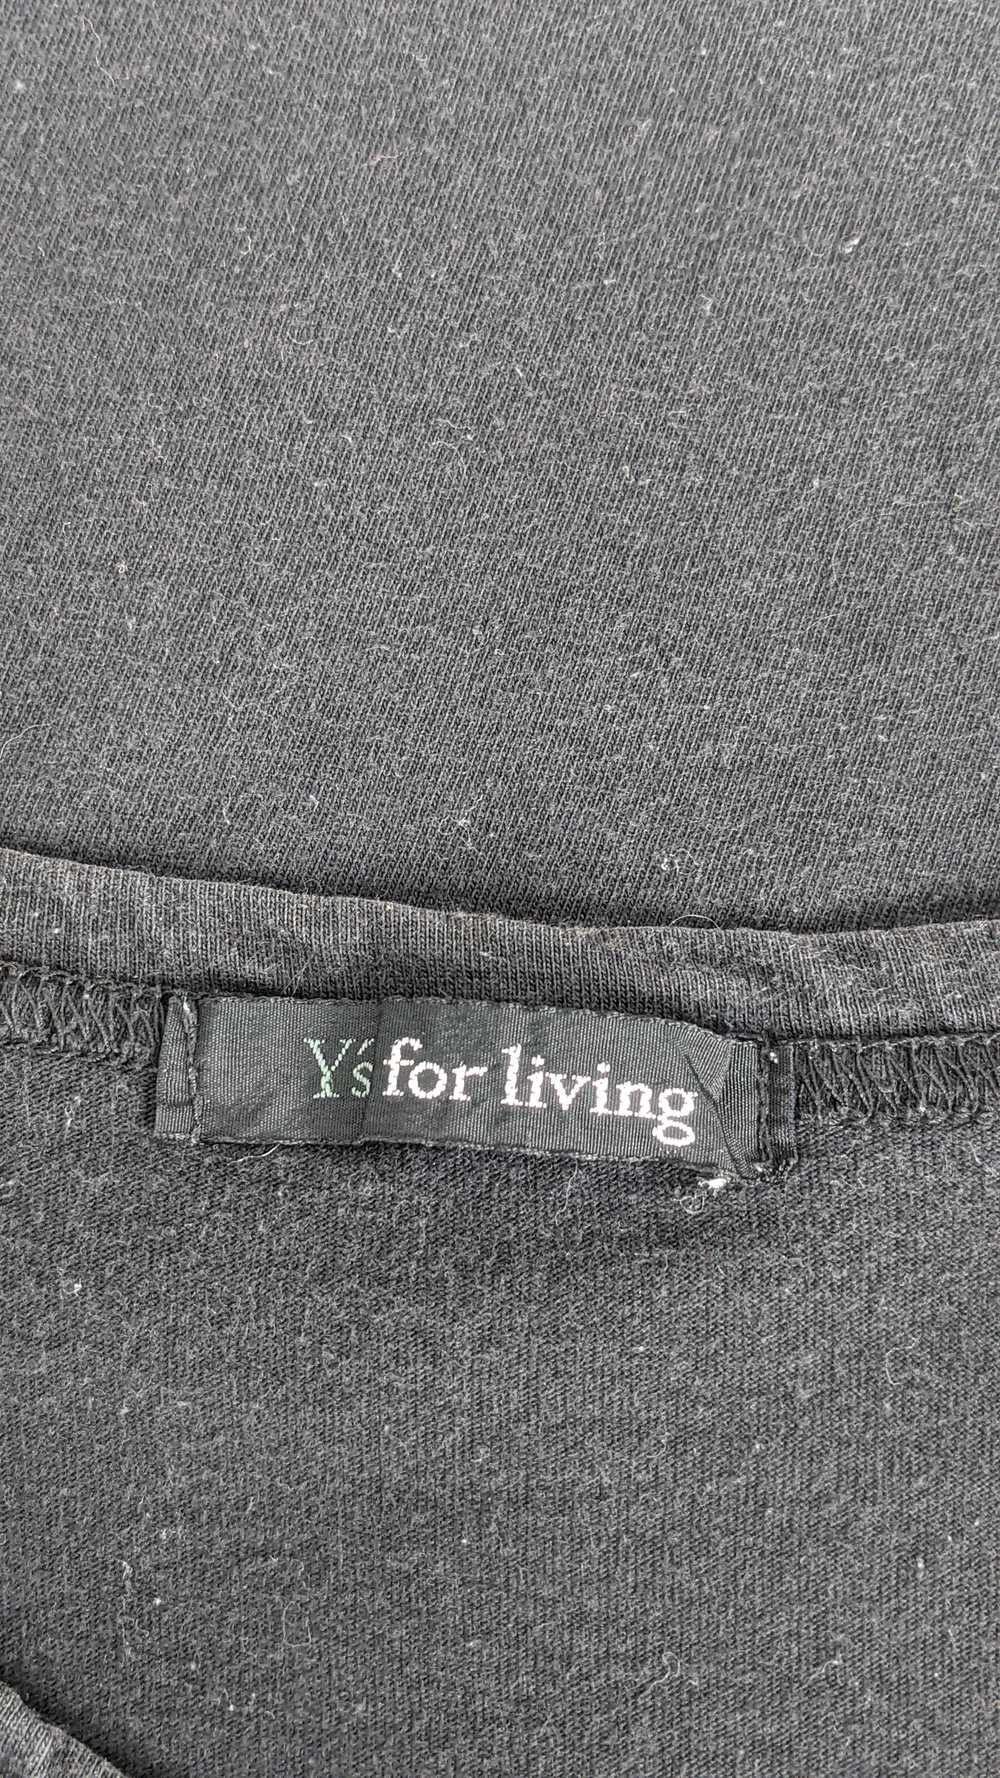 Y's for living Yohji Yamamoto shirt - image 4